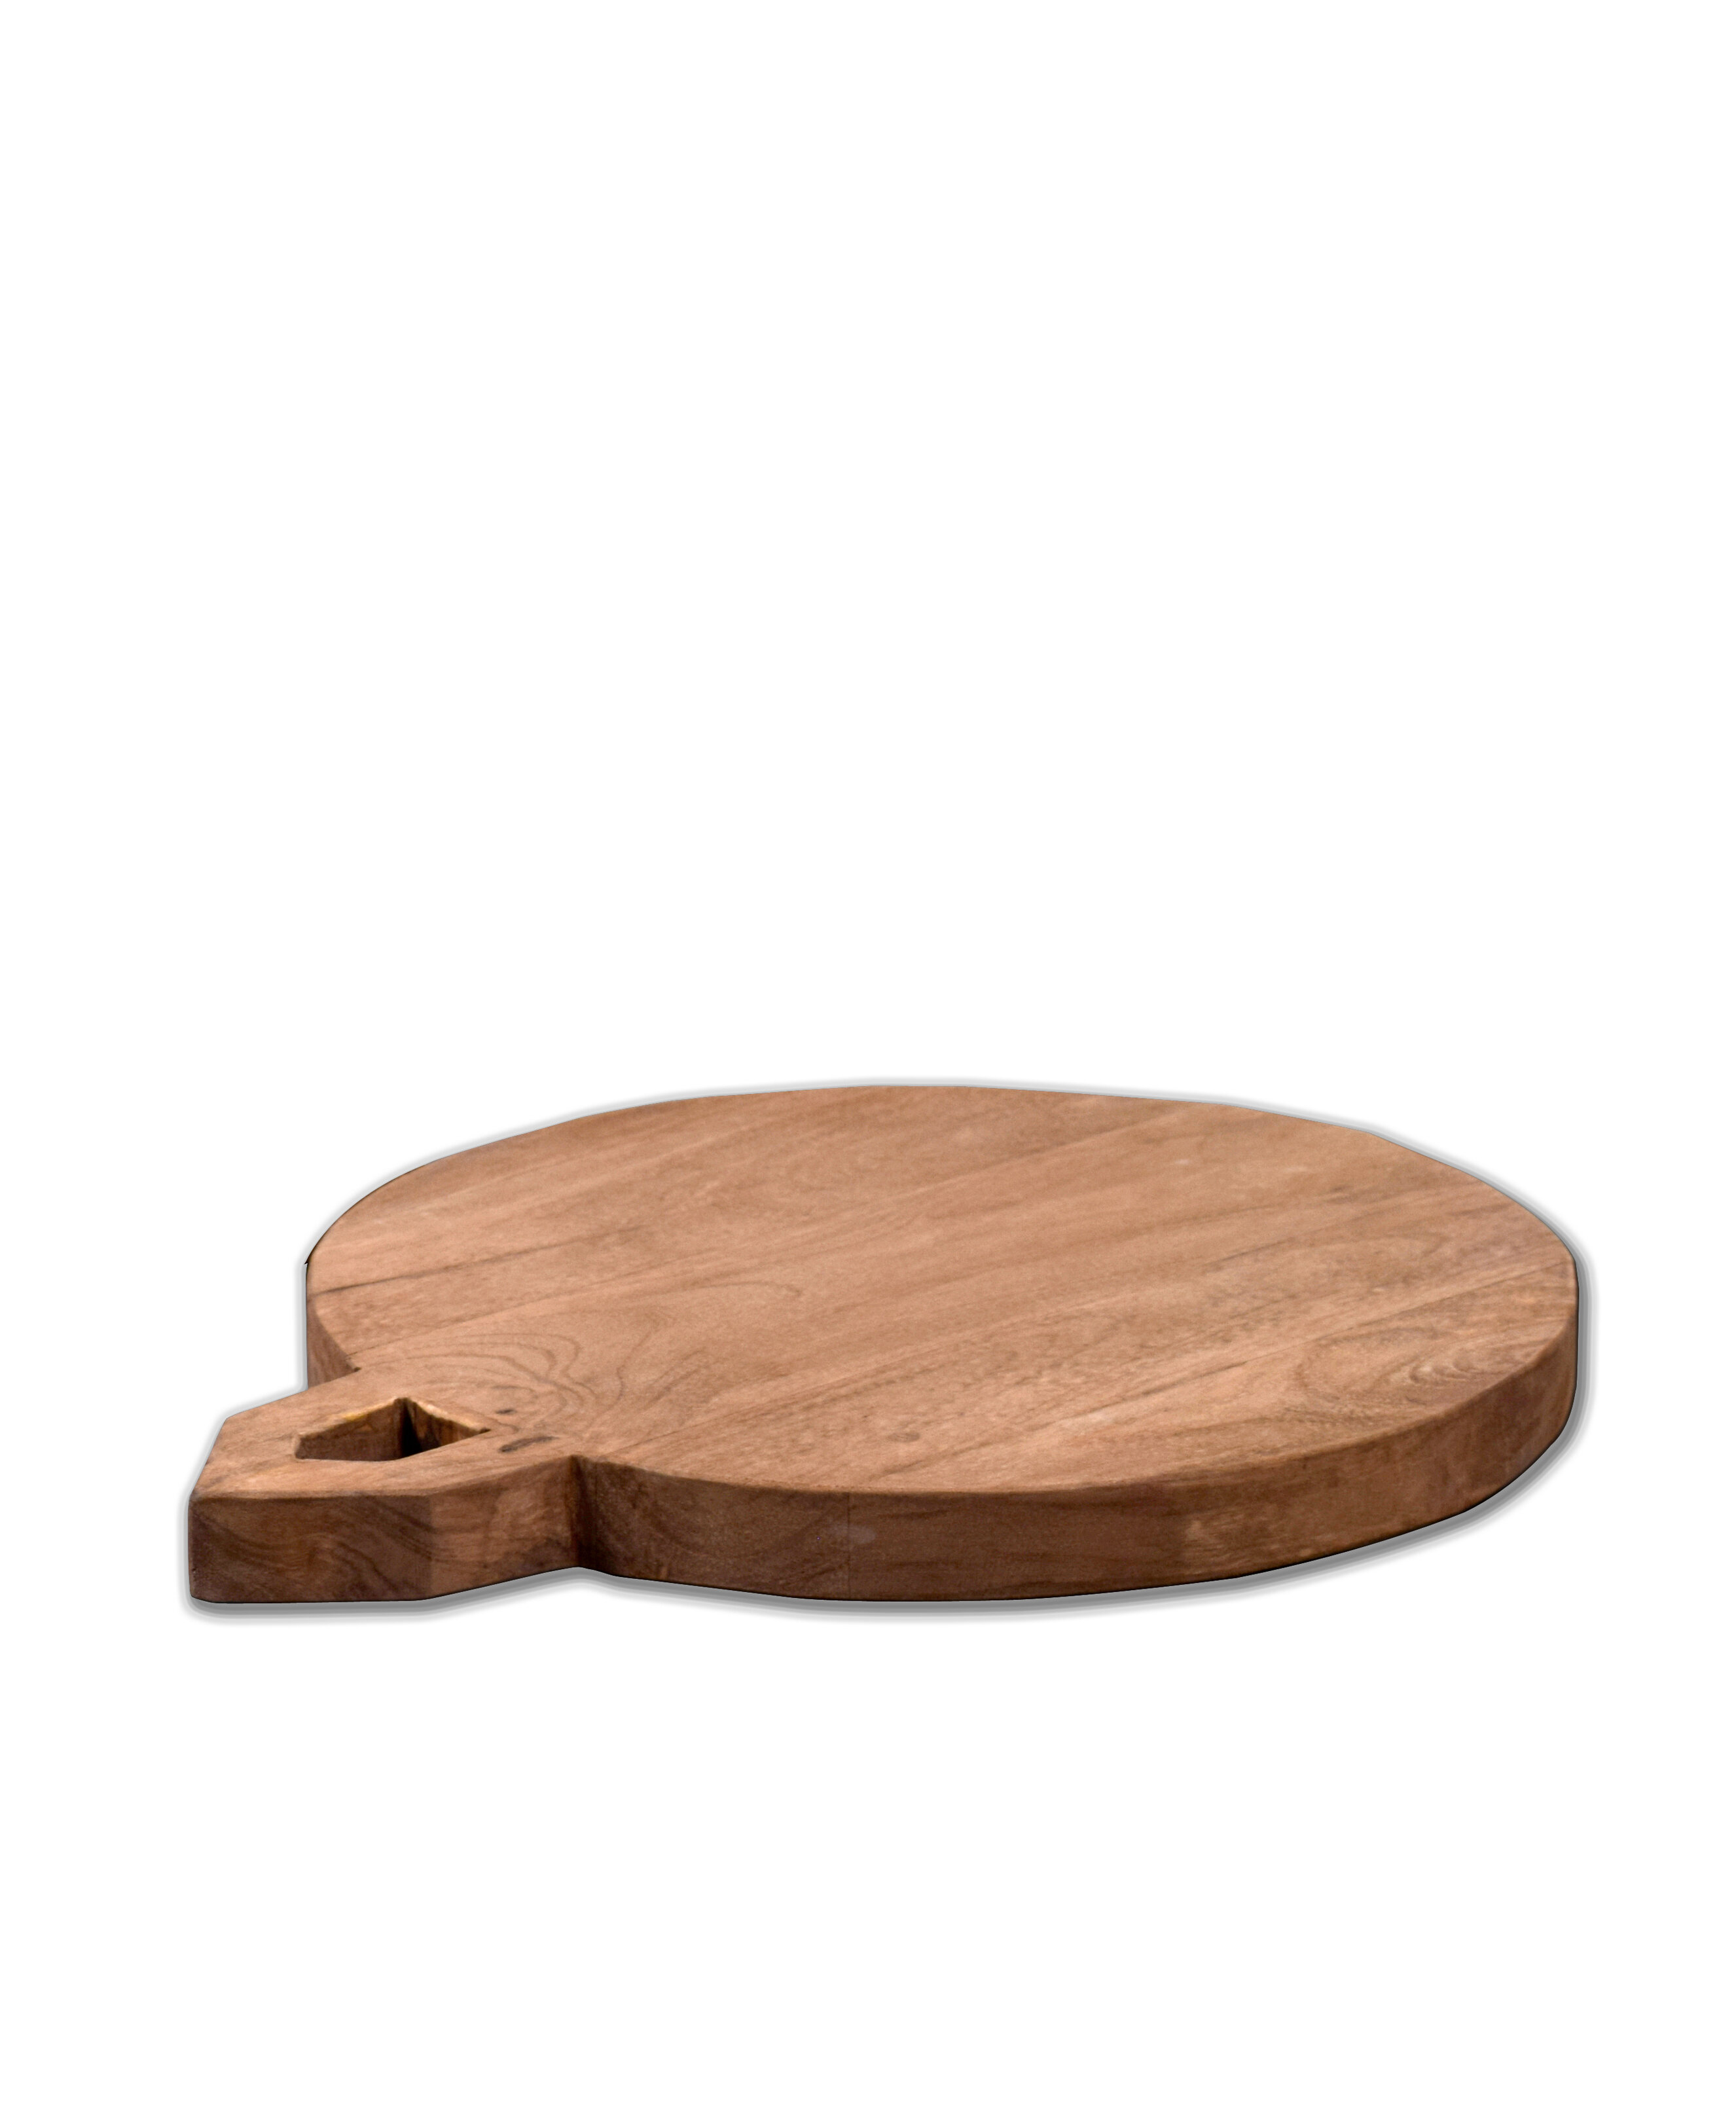 Edelman Wood Cutting Board Size: 7.87 L x 11.81 W